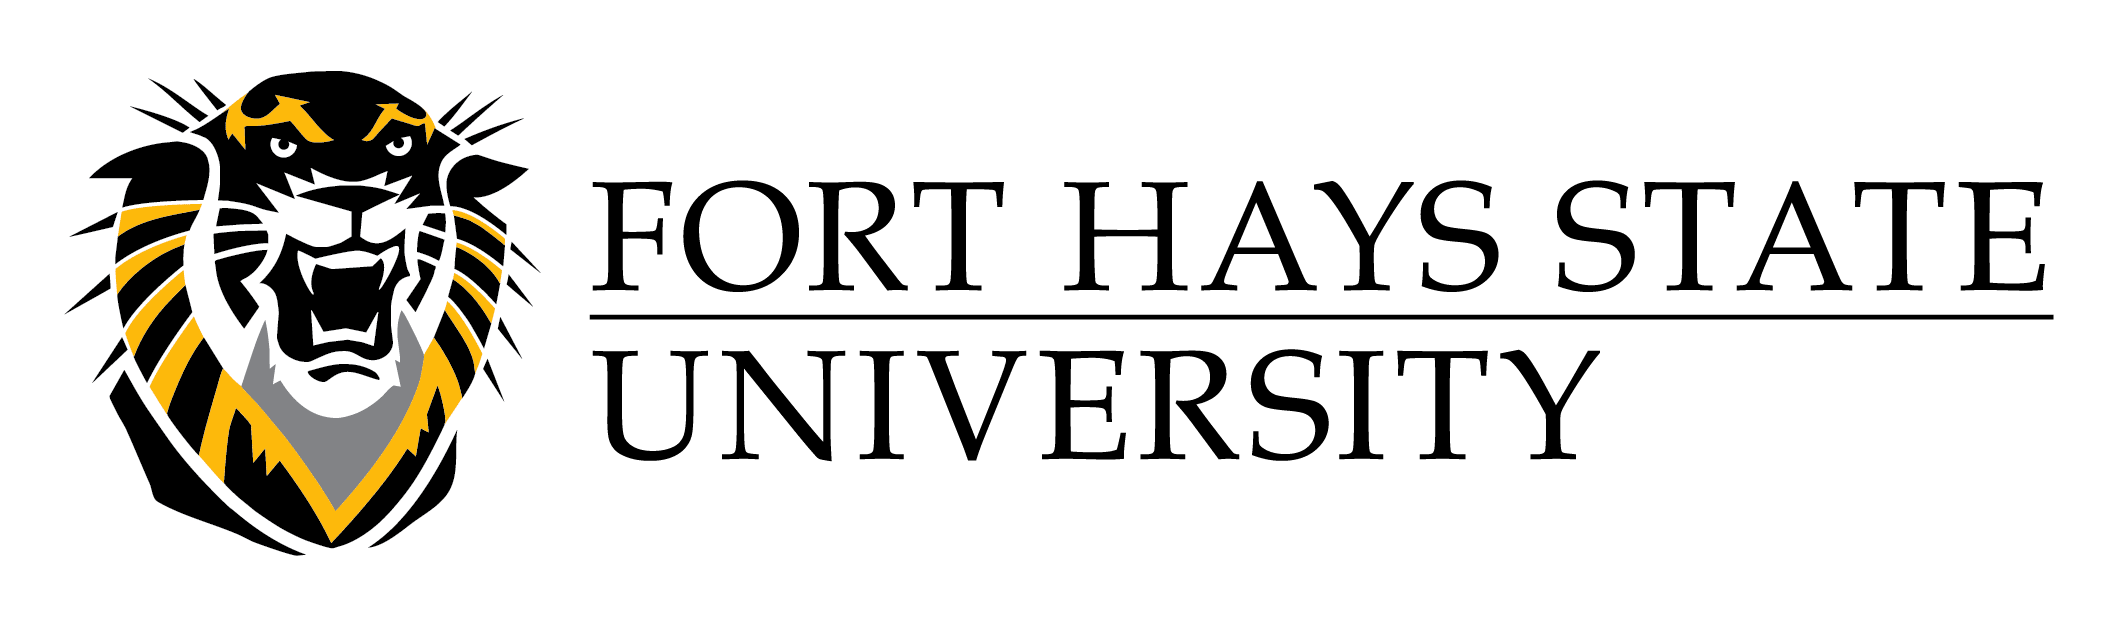 FHSU Logo and Identity Marks - Fort Hays State University